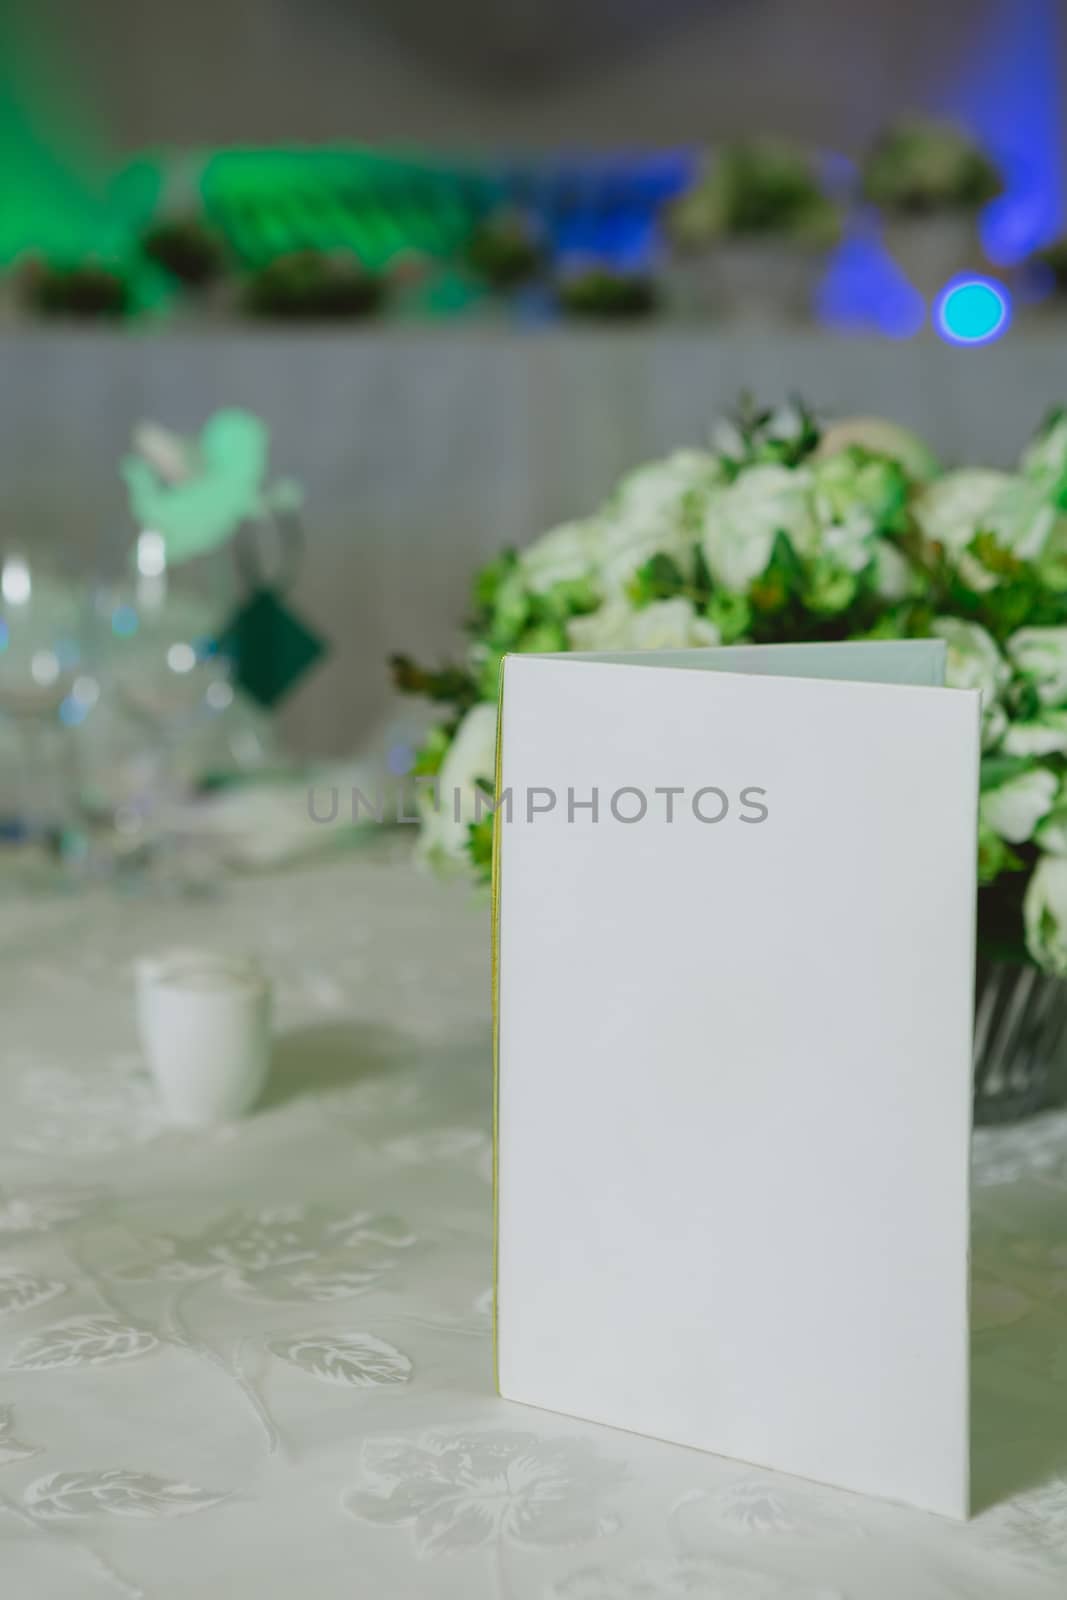 Elegant table set up for wedding banquet by sarymsakov